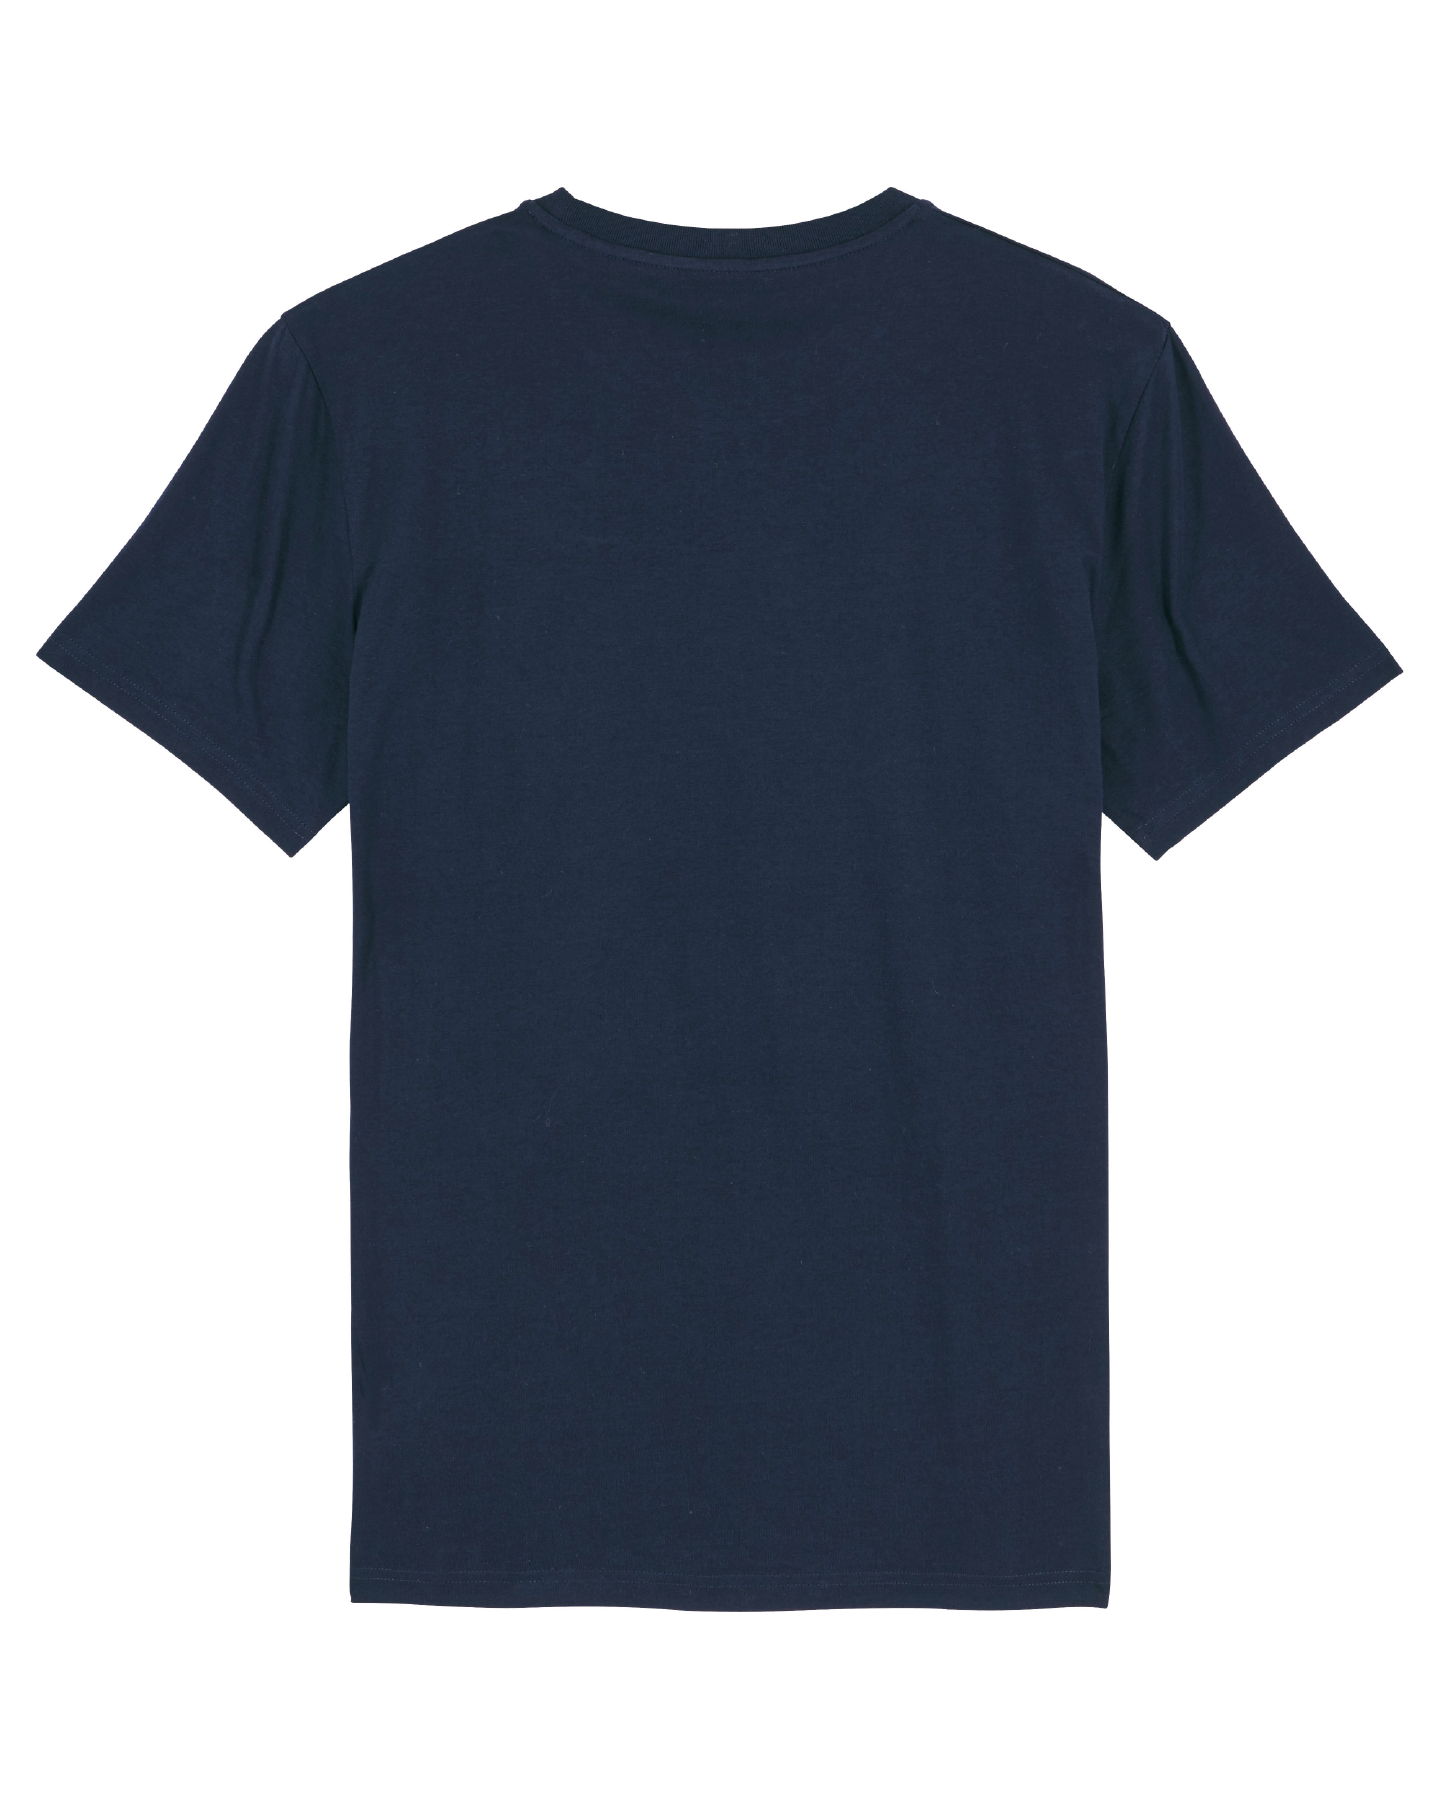 T-Shirt Herren LAUSITZ navy blau